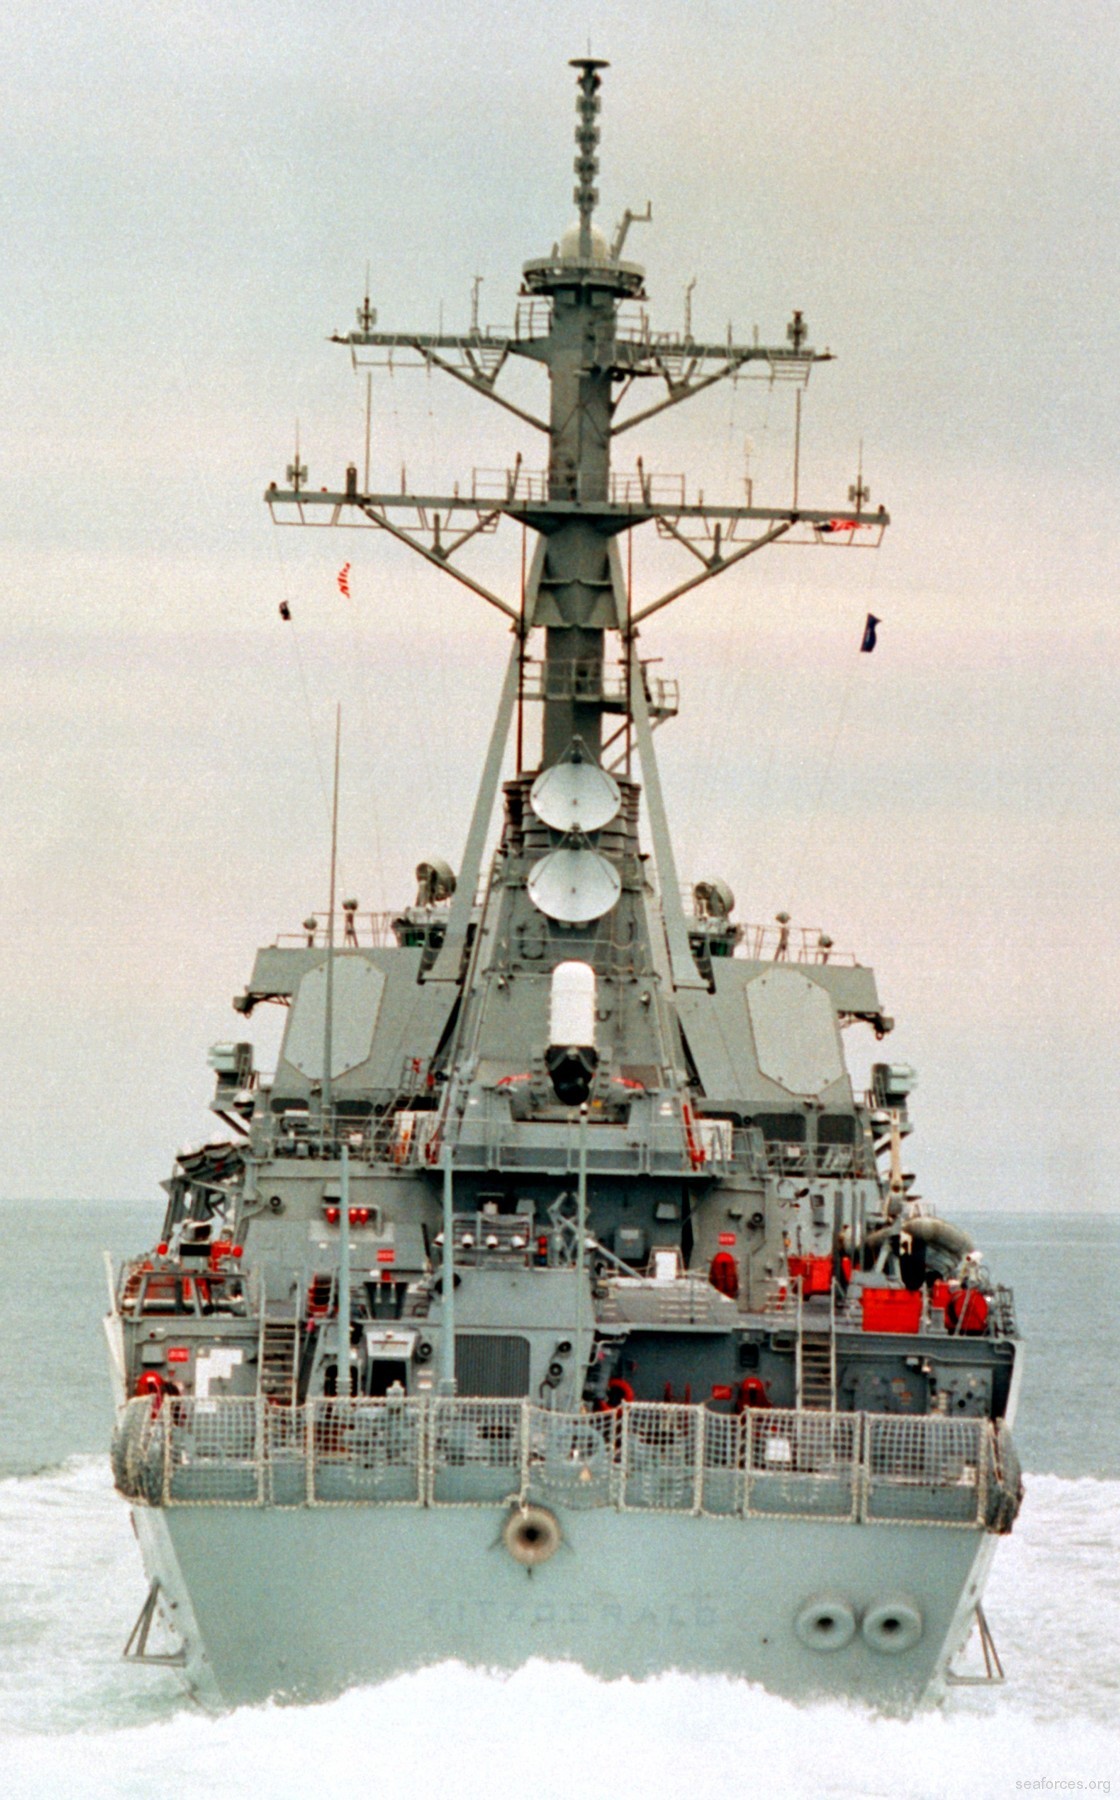 ddg-62 uss fitzgerald guided missile destroyer 1995 101 sea trials bath iron works maine